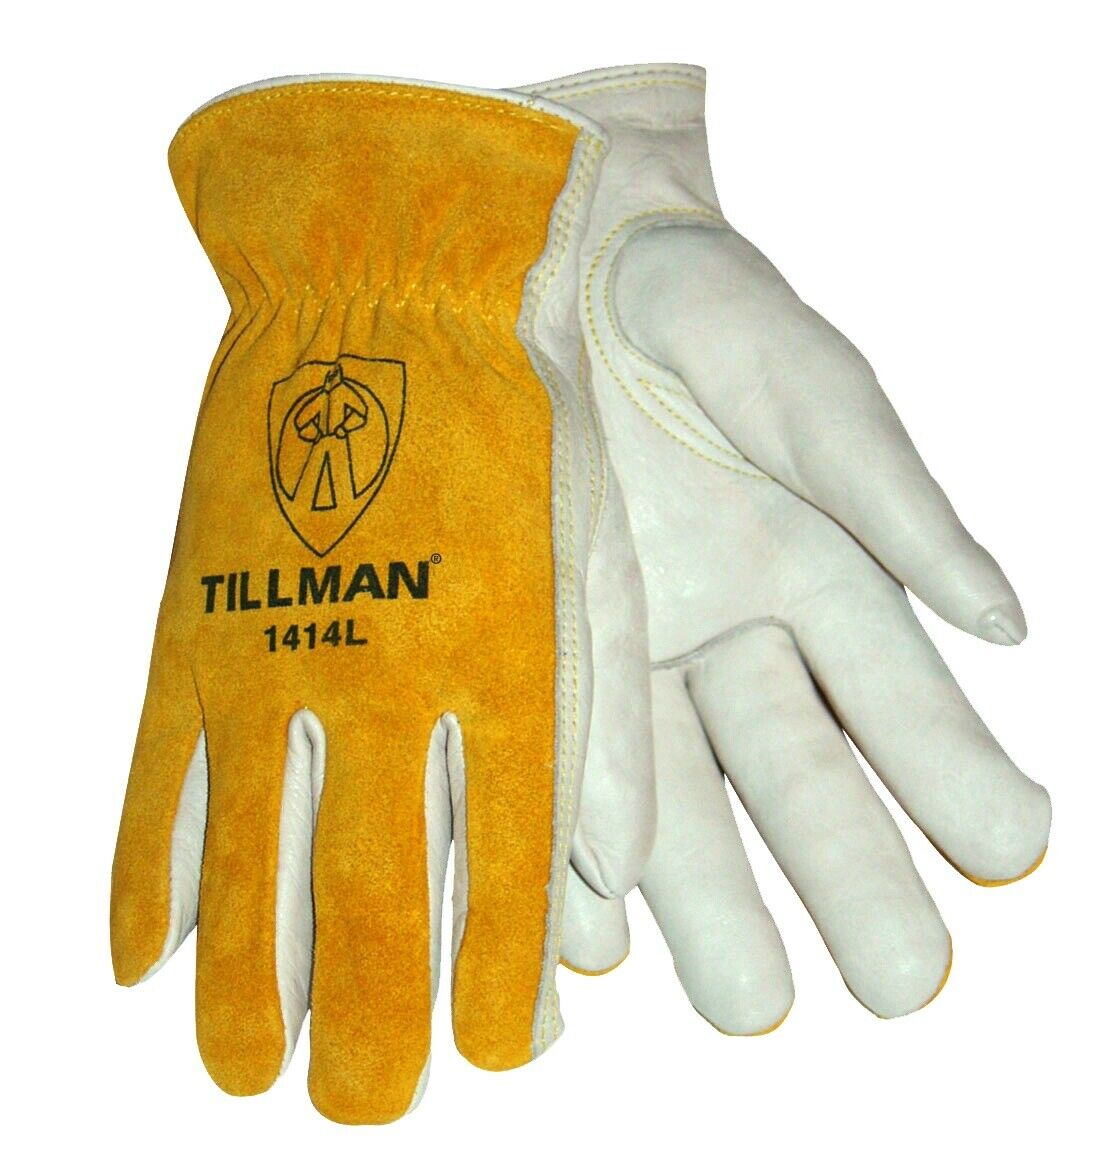 Tillman 1414 Drivers Work Gloves Top Grain Pearl Cowhidesplit Leather Back Xs-xl